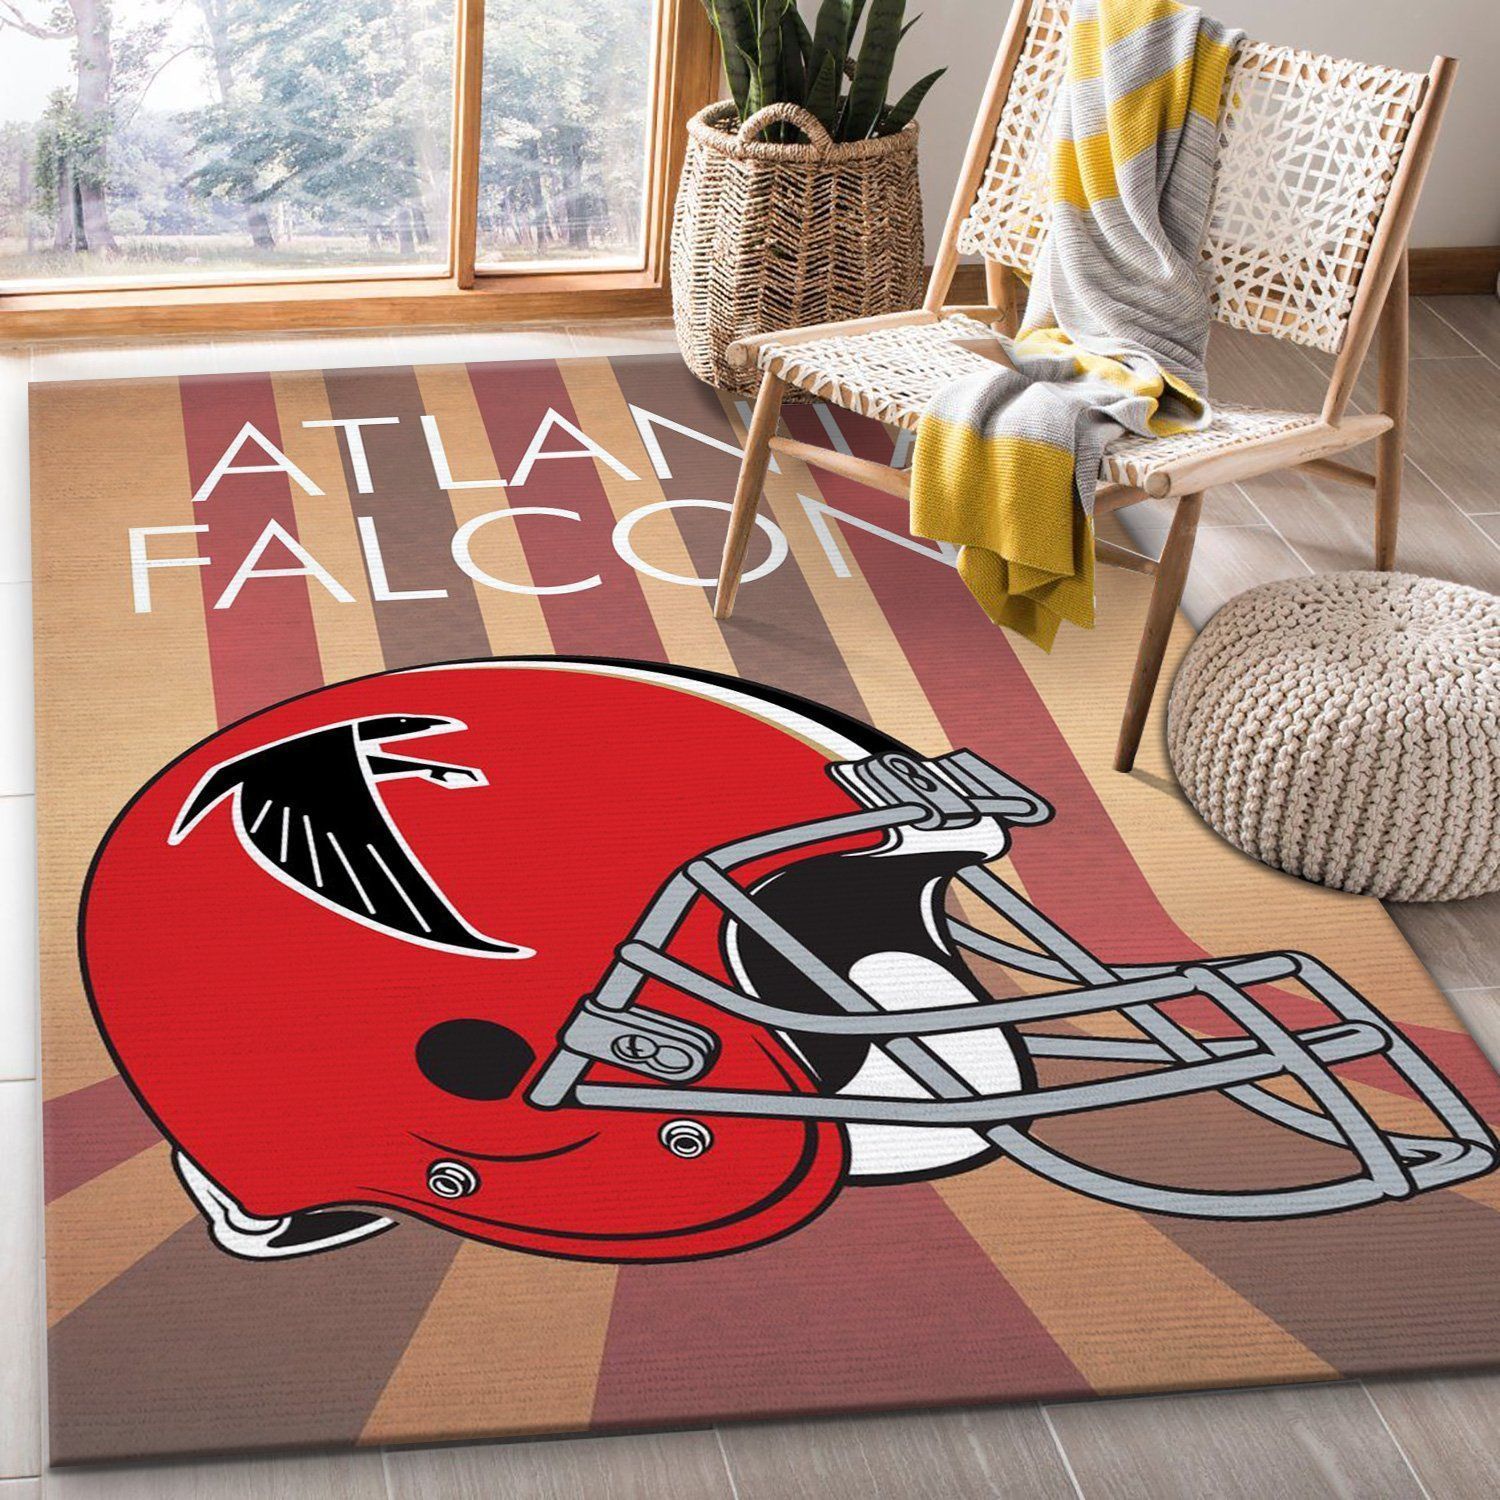 Atlanta Falcons Retro Nfl Area Rug Living Room Rug Home US Decor - Indoor Outdoor Rugs 1